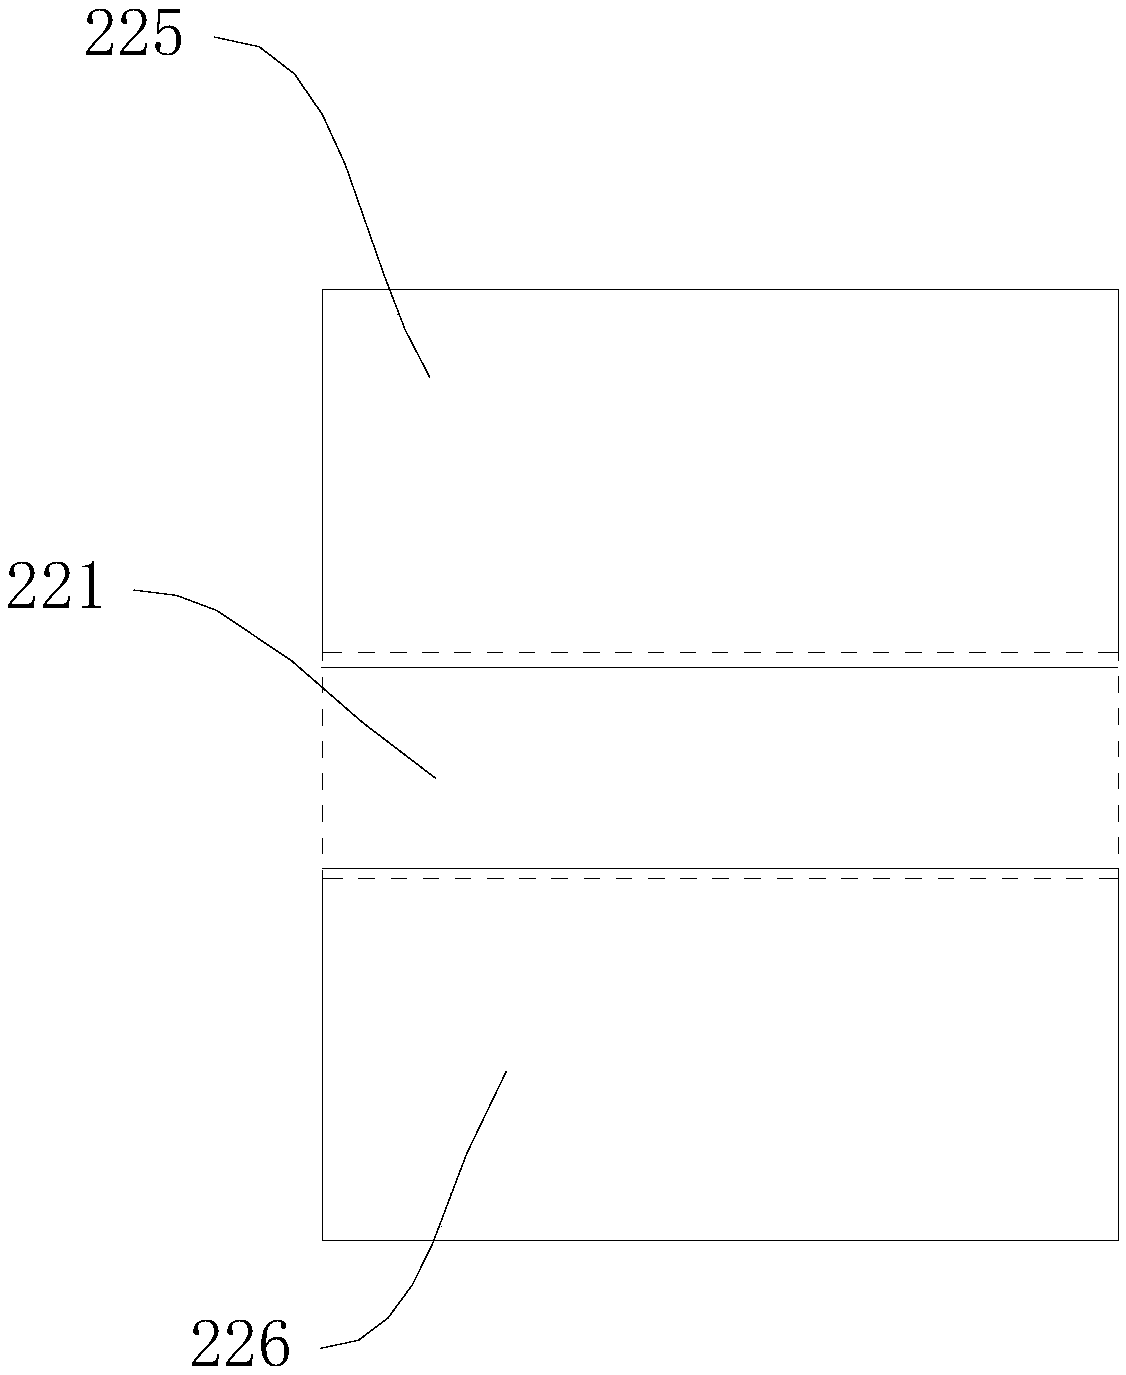 Display panel and manufacturing method of display panel